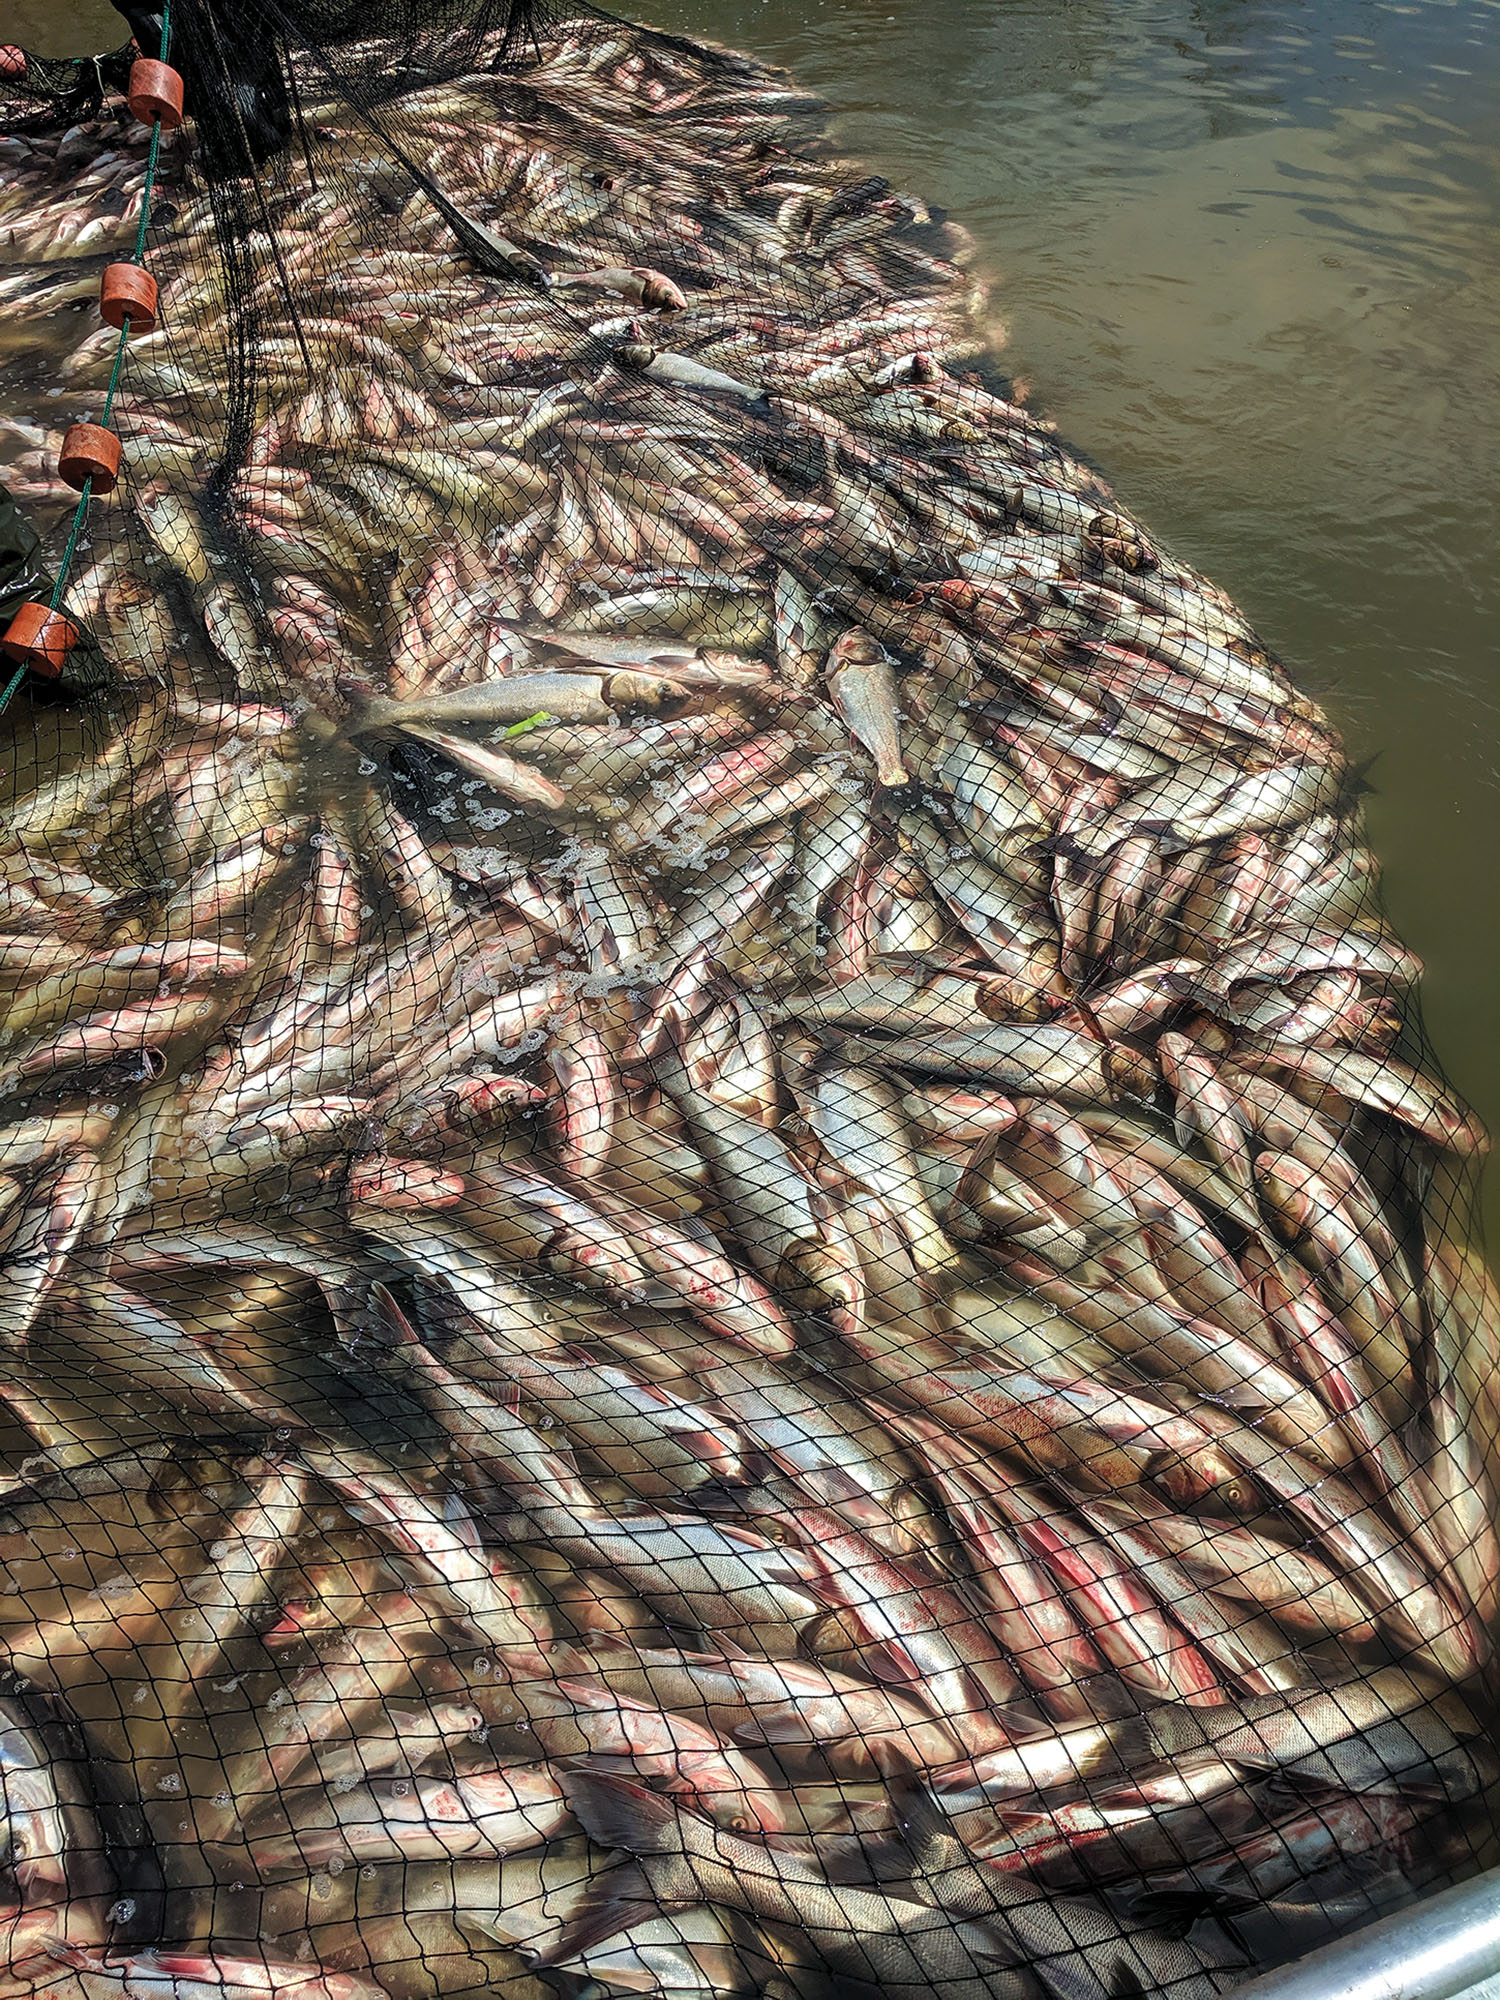 Asian Carp Fishing Method Being Tested In Kentucky - The Waterways Journal